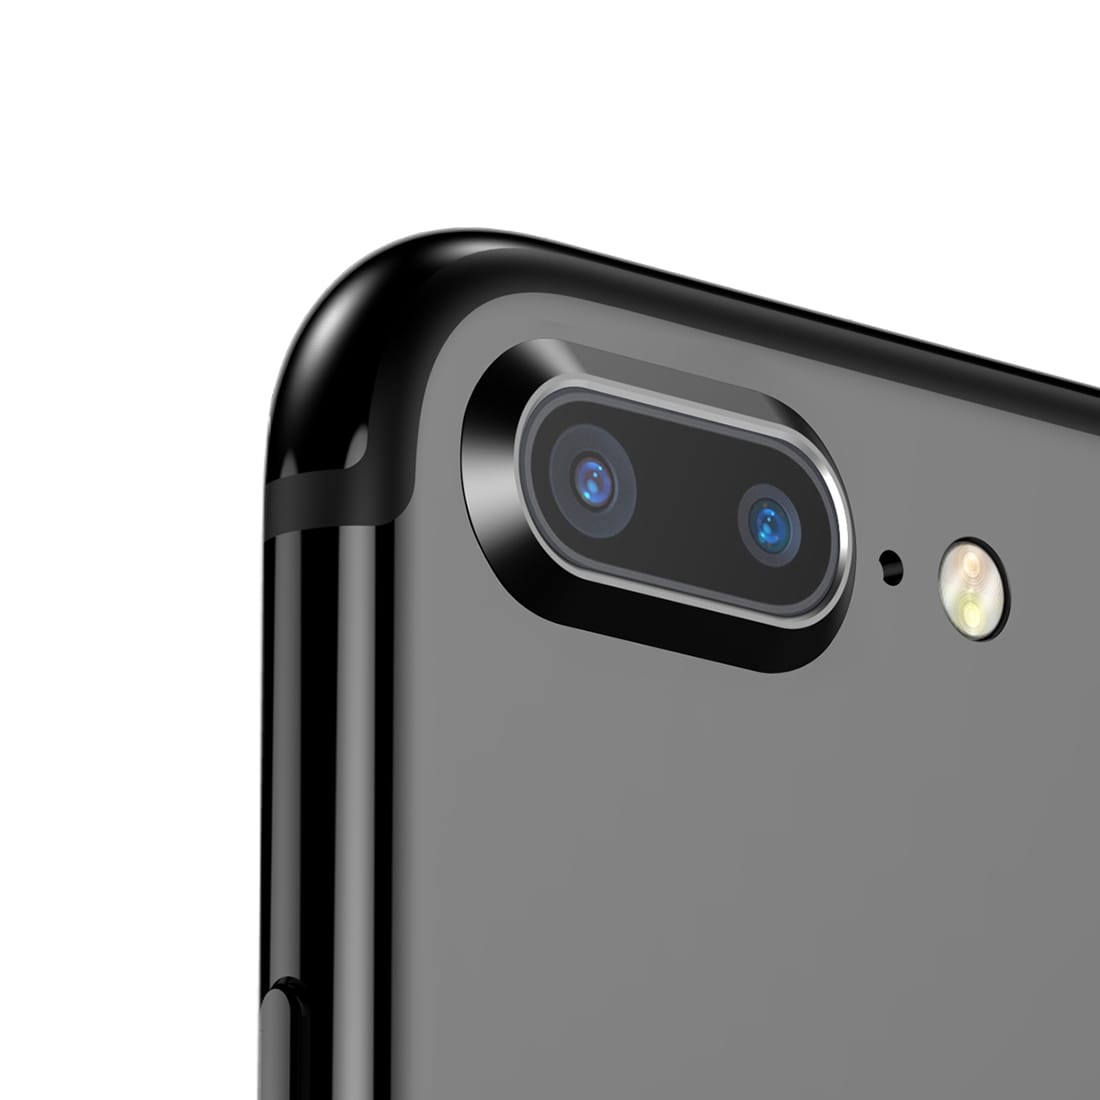 Bageste kamera-skåner iPhone 7 Plus i metal